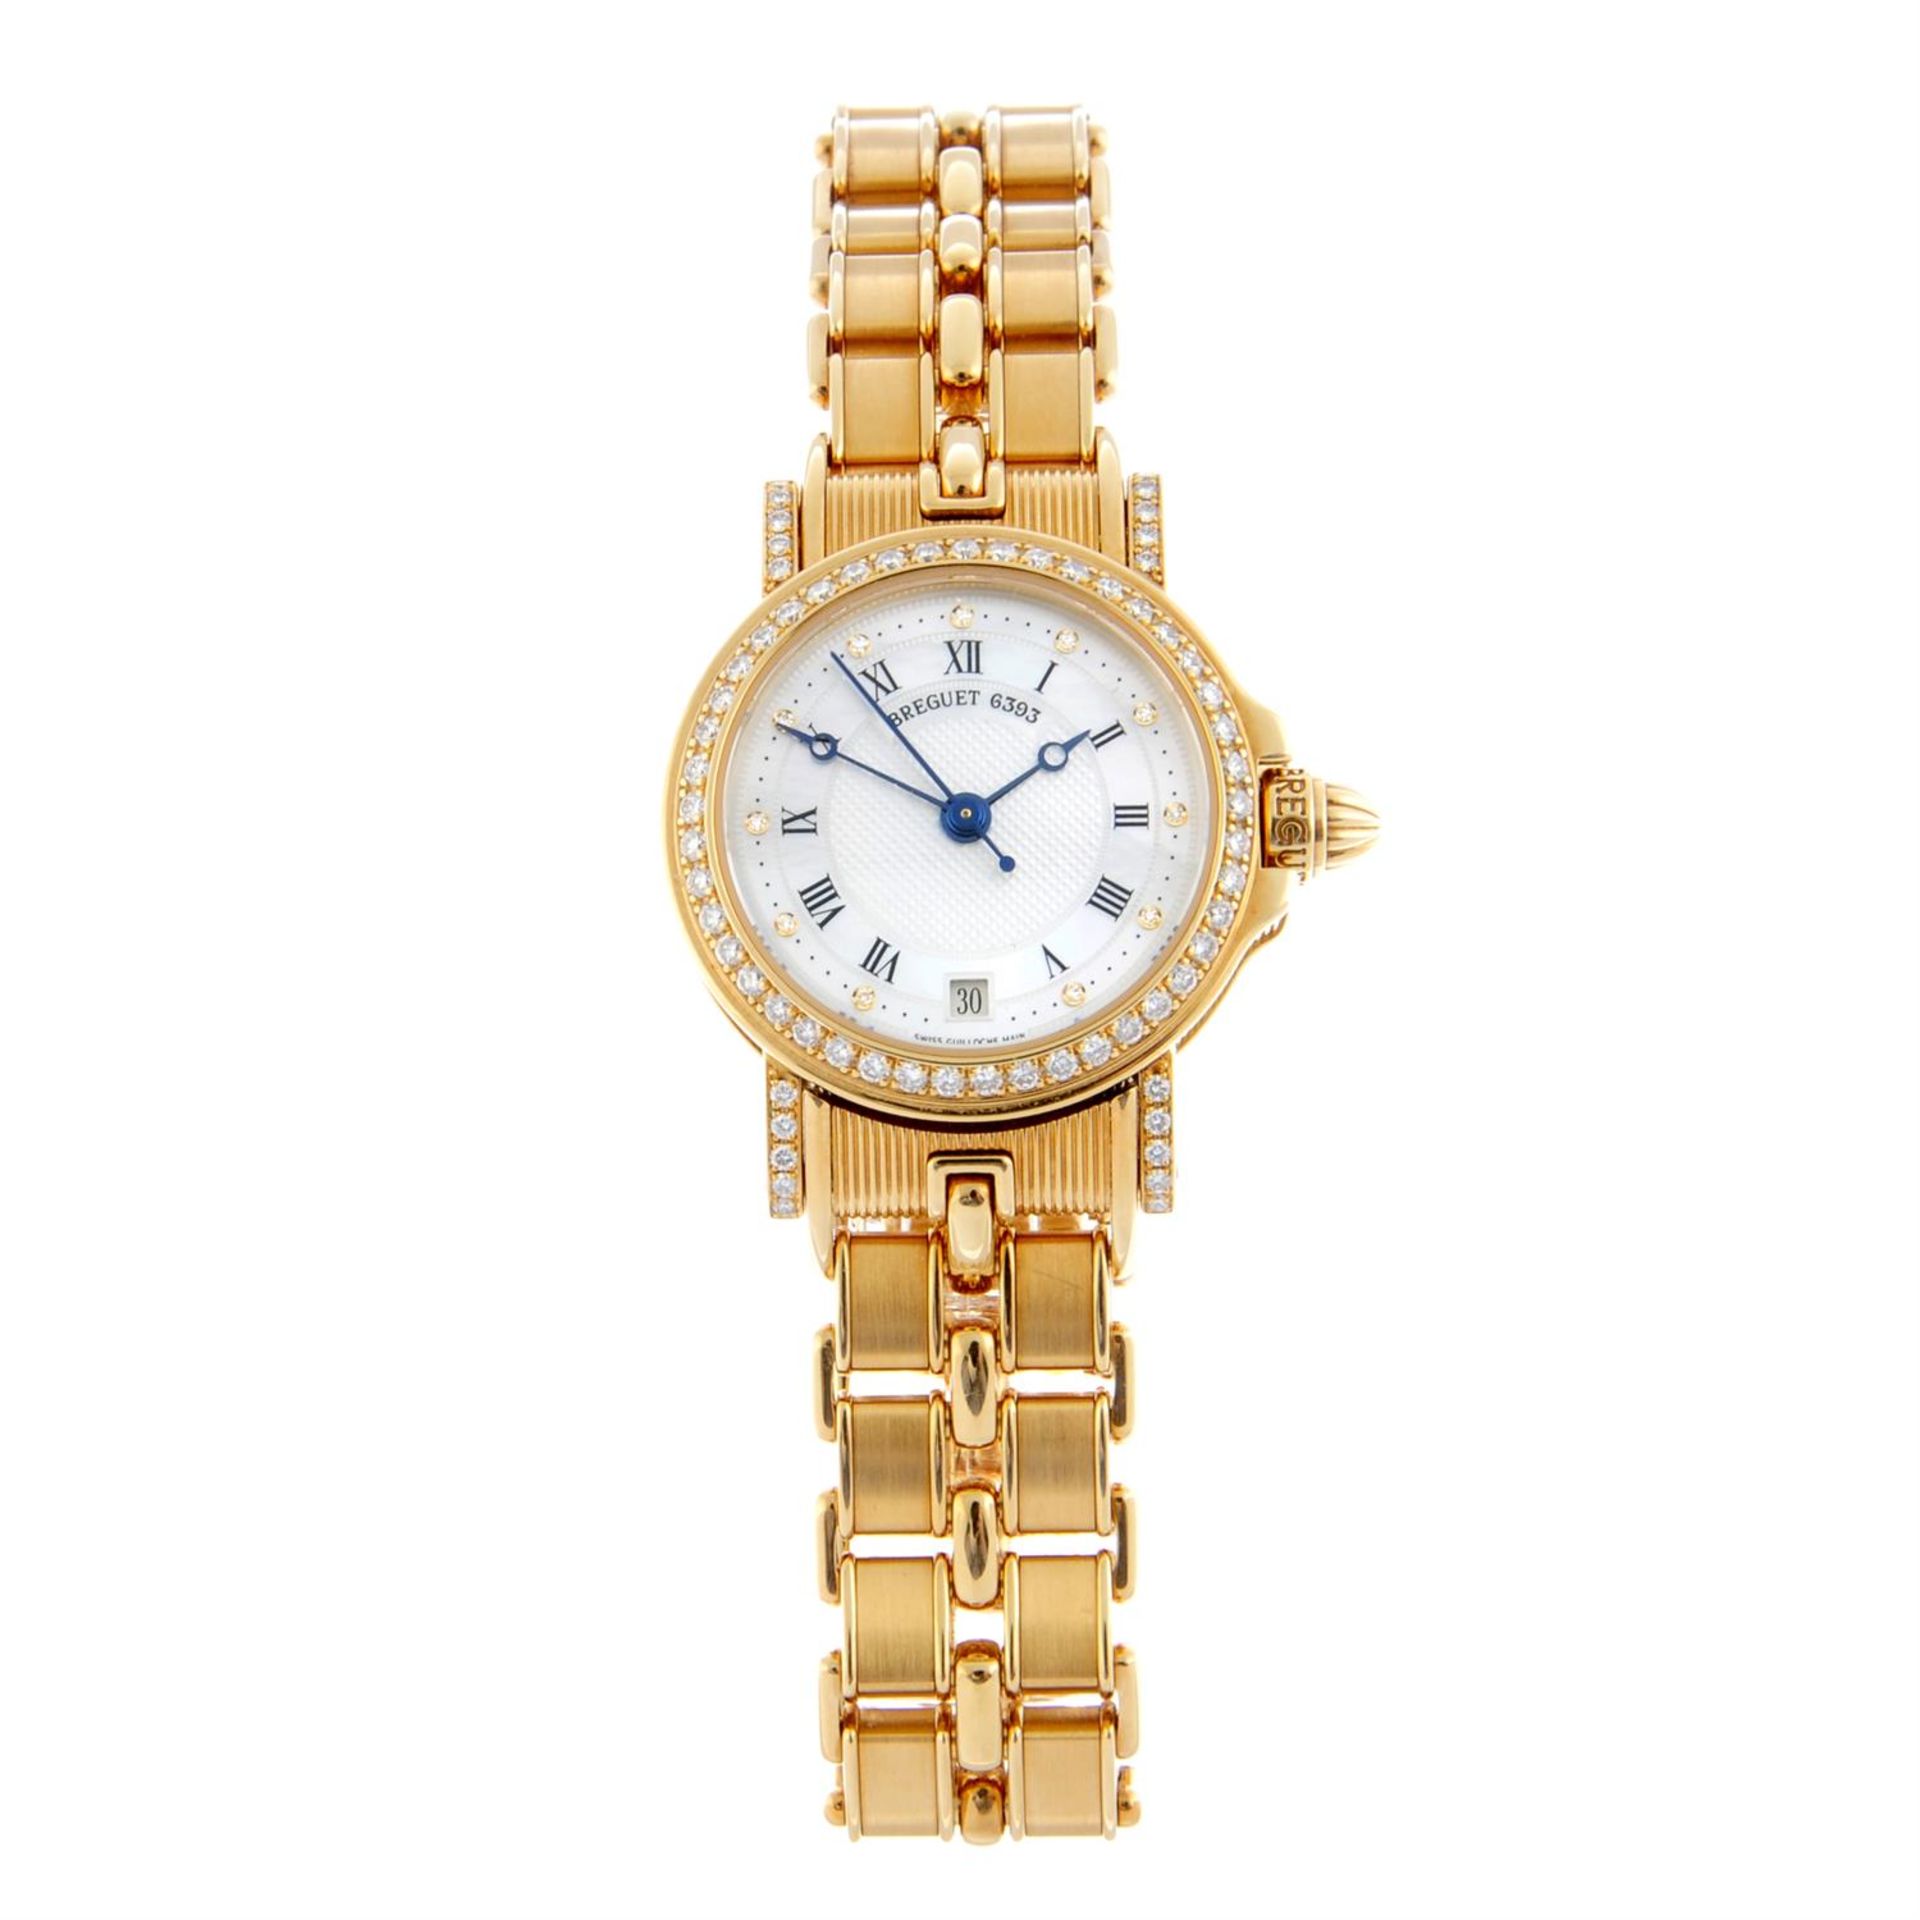 BREGUET - a diamond set 18ct yellow gold Horloger De La Marine bracelet watch, 26mm.